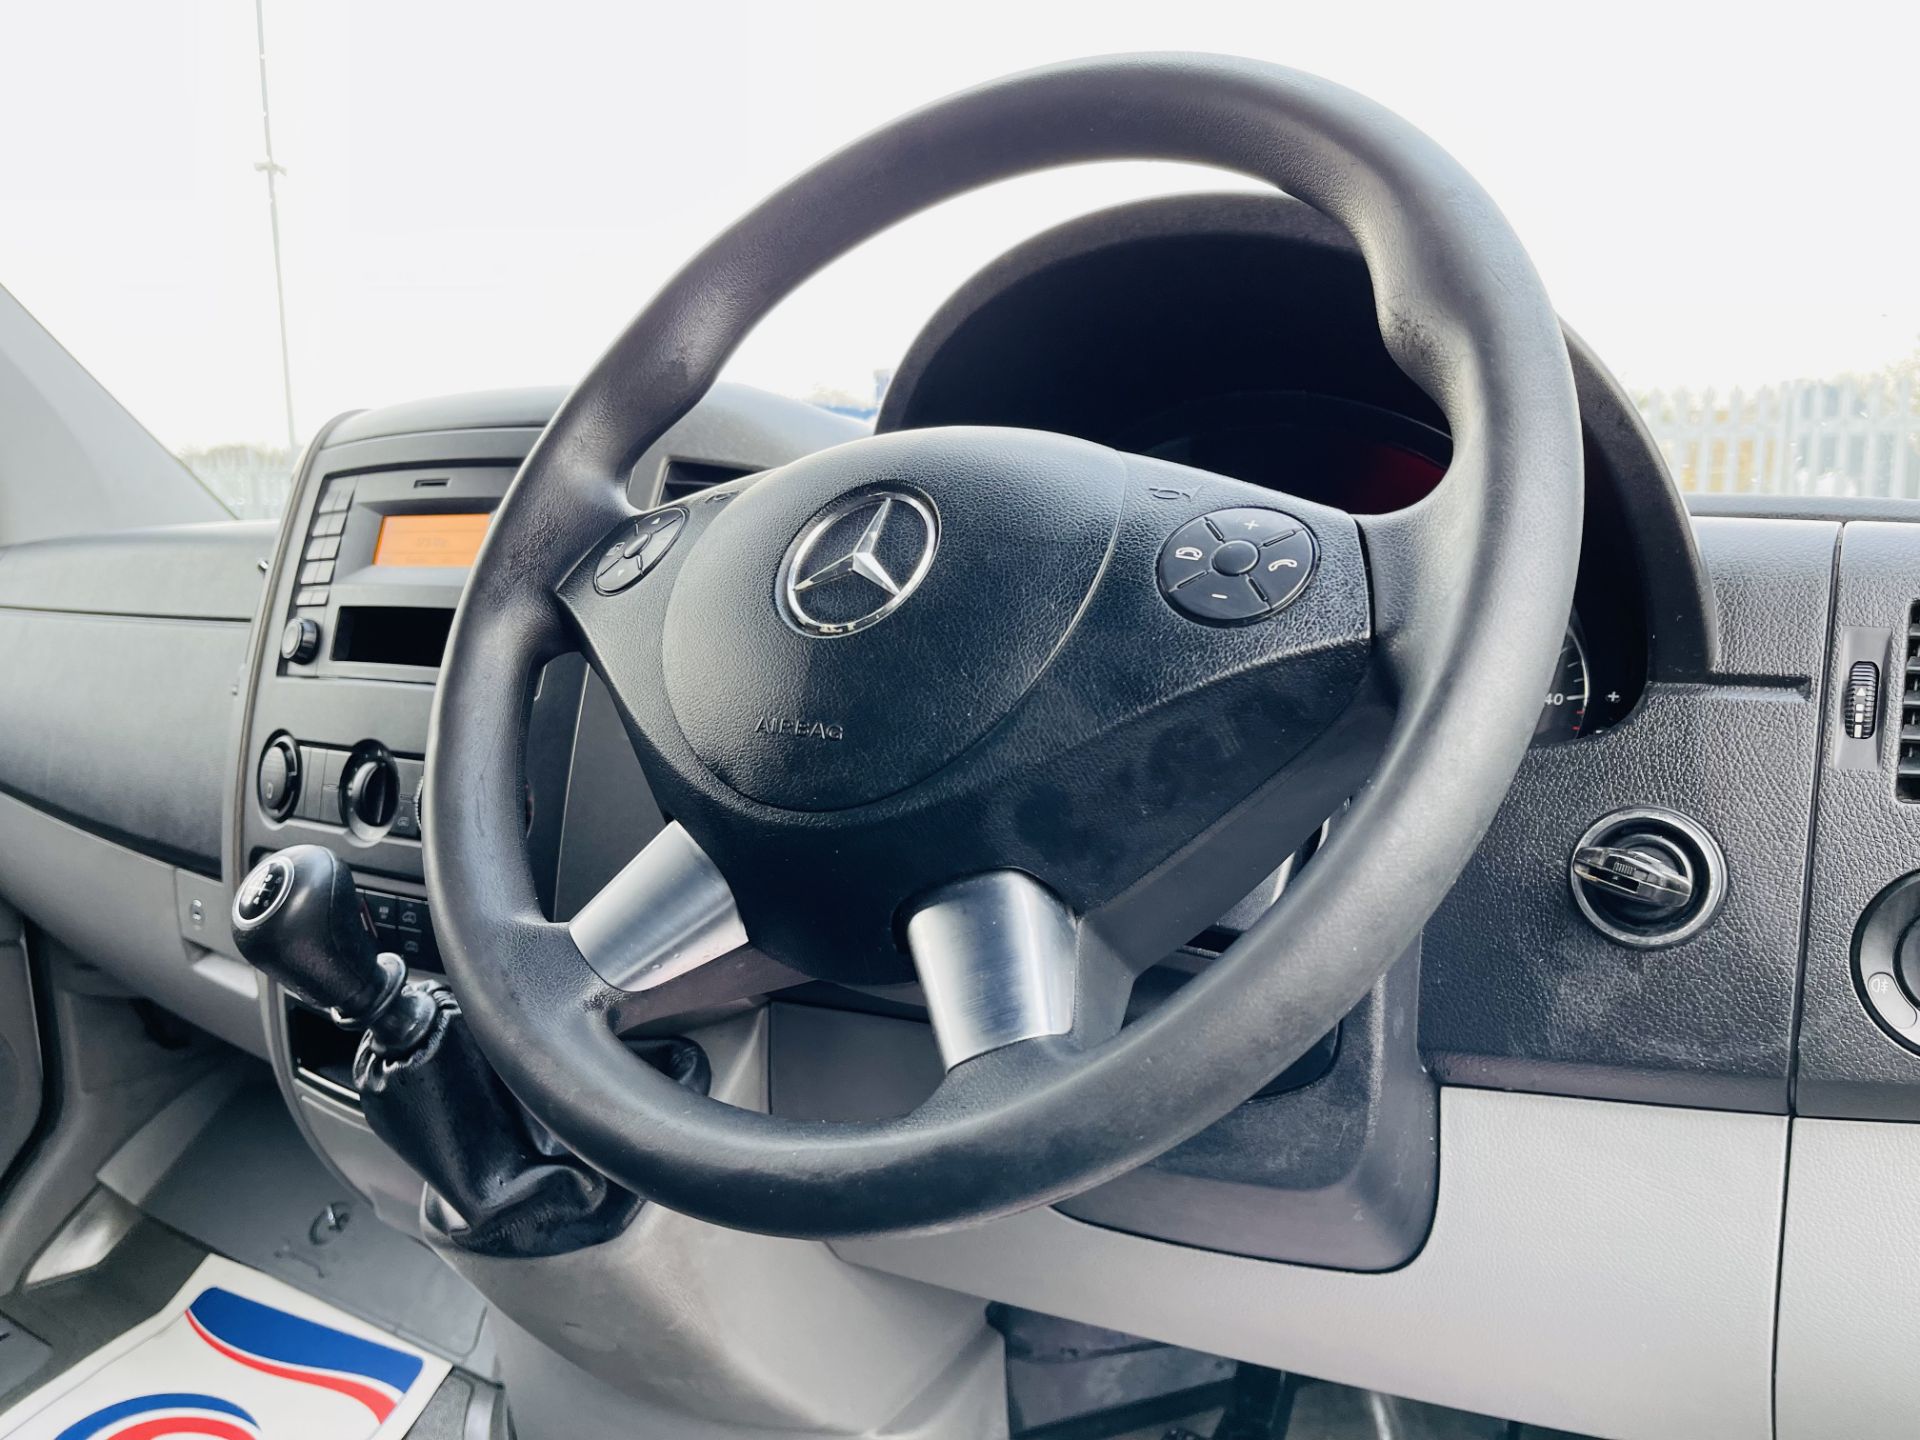 Mercedes Benz Sprinter 2.1 313 CDI L3 H3 2014 '64 Reg' - Cruise Control - Image 23 of 23